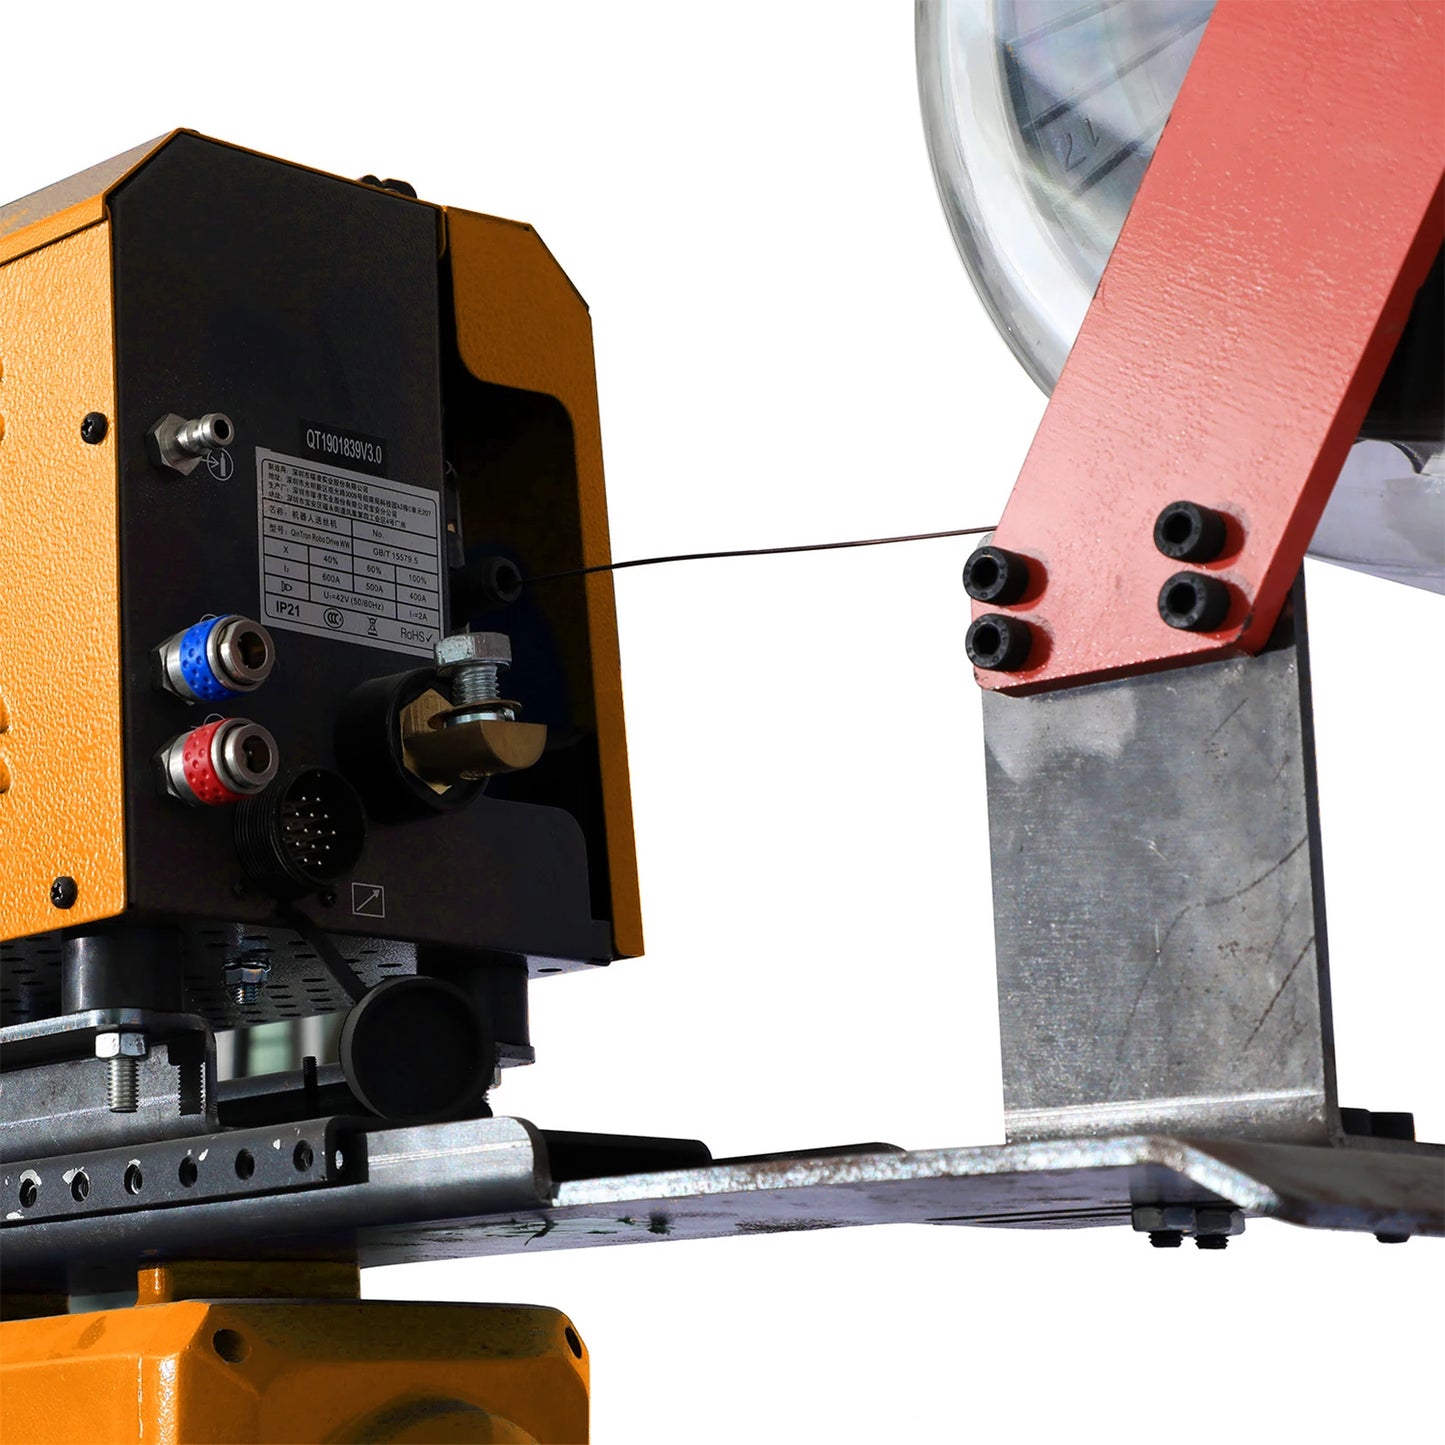 YYHC2023 Best Price China Manufacturer Industrial Robots for Welding 6 Axis Welding Robot Laser Welding Equipment